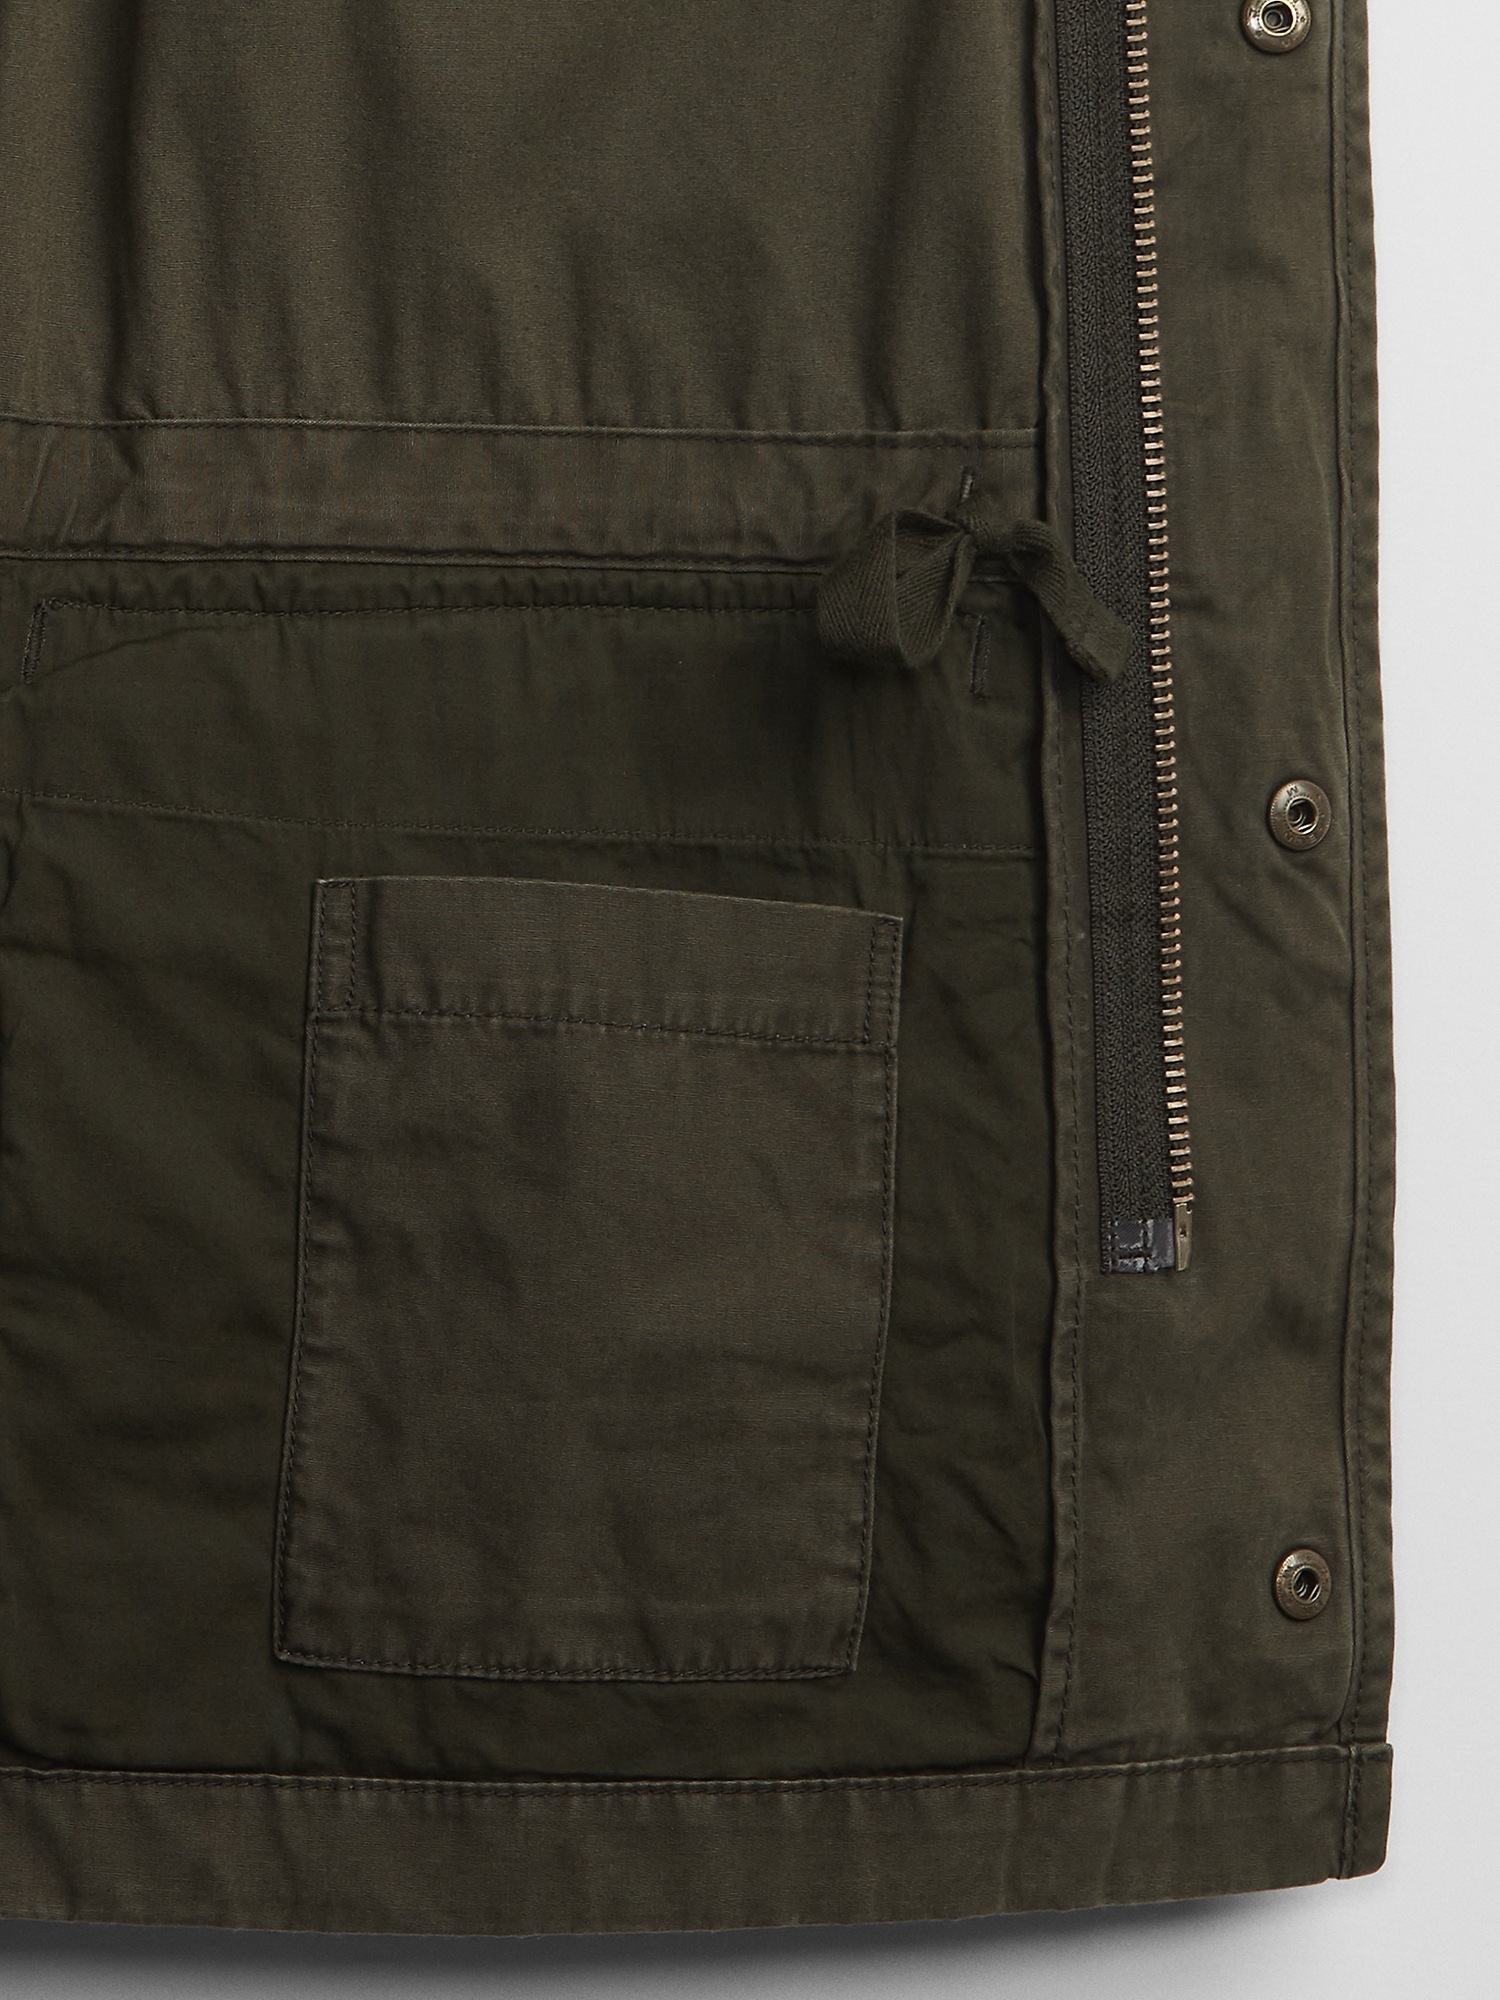 Military Jacket with Hidden Hood | Gap Factory